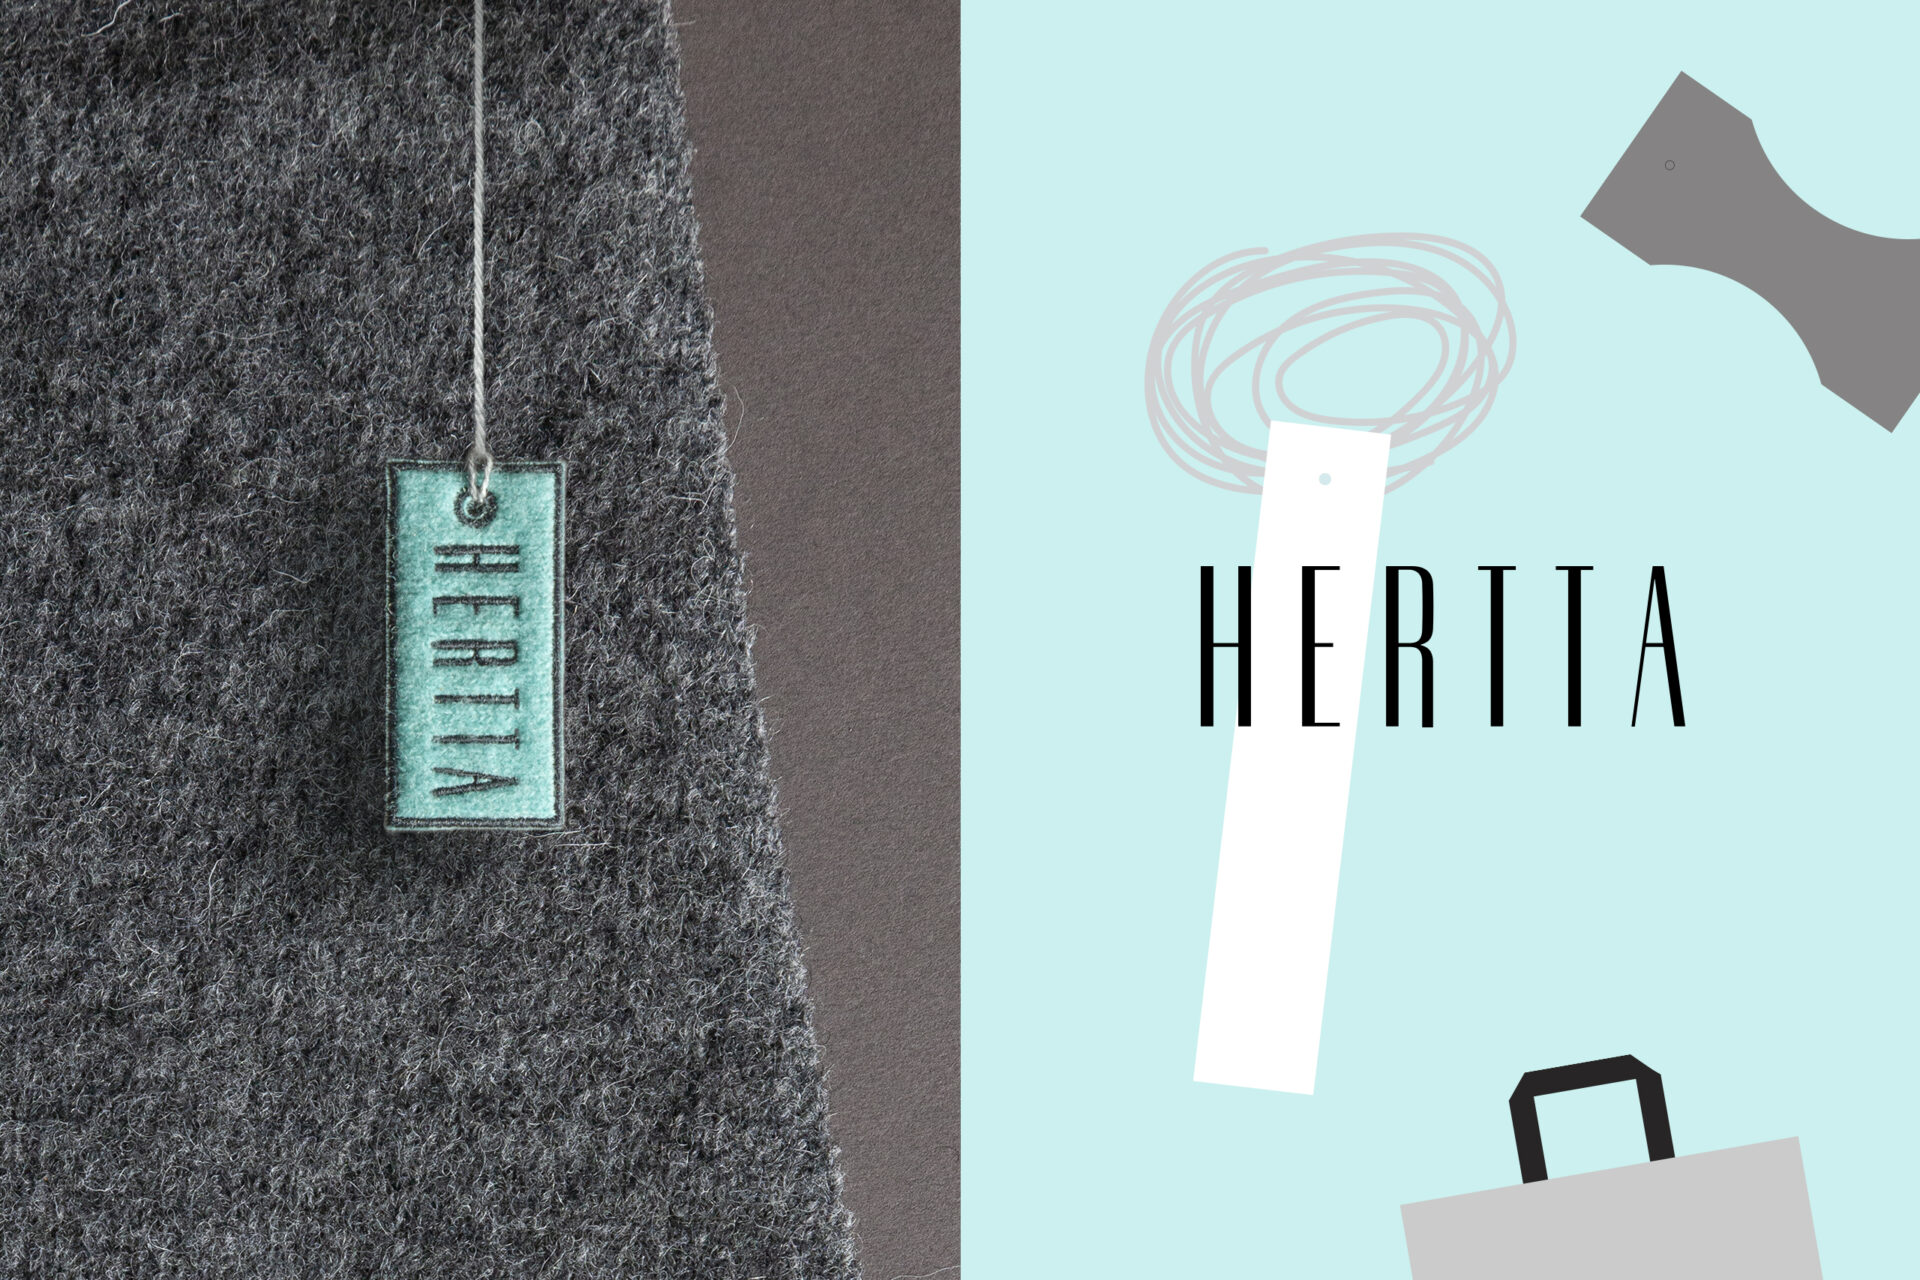 Visuaalne identiteet, logo ja bränding - Hertta Knitwear